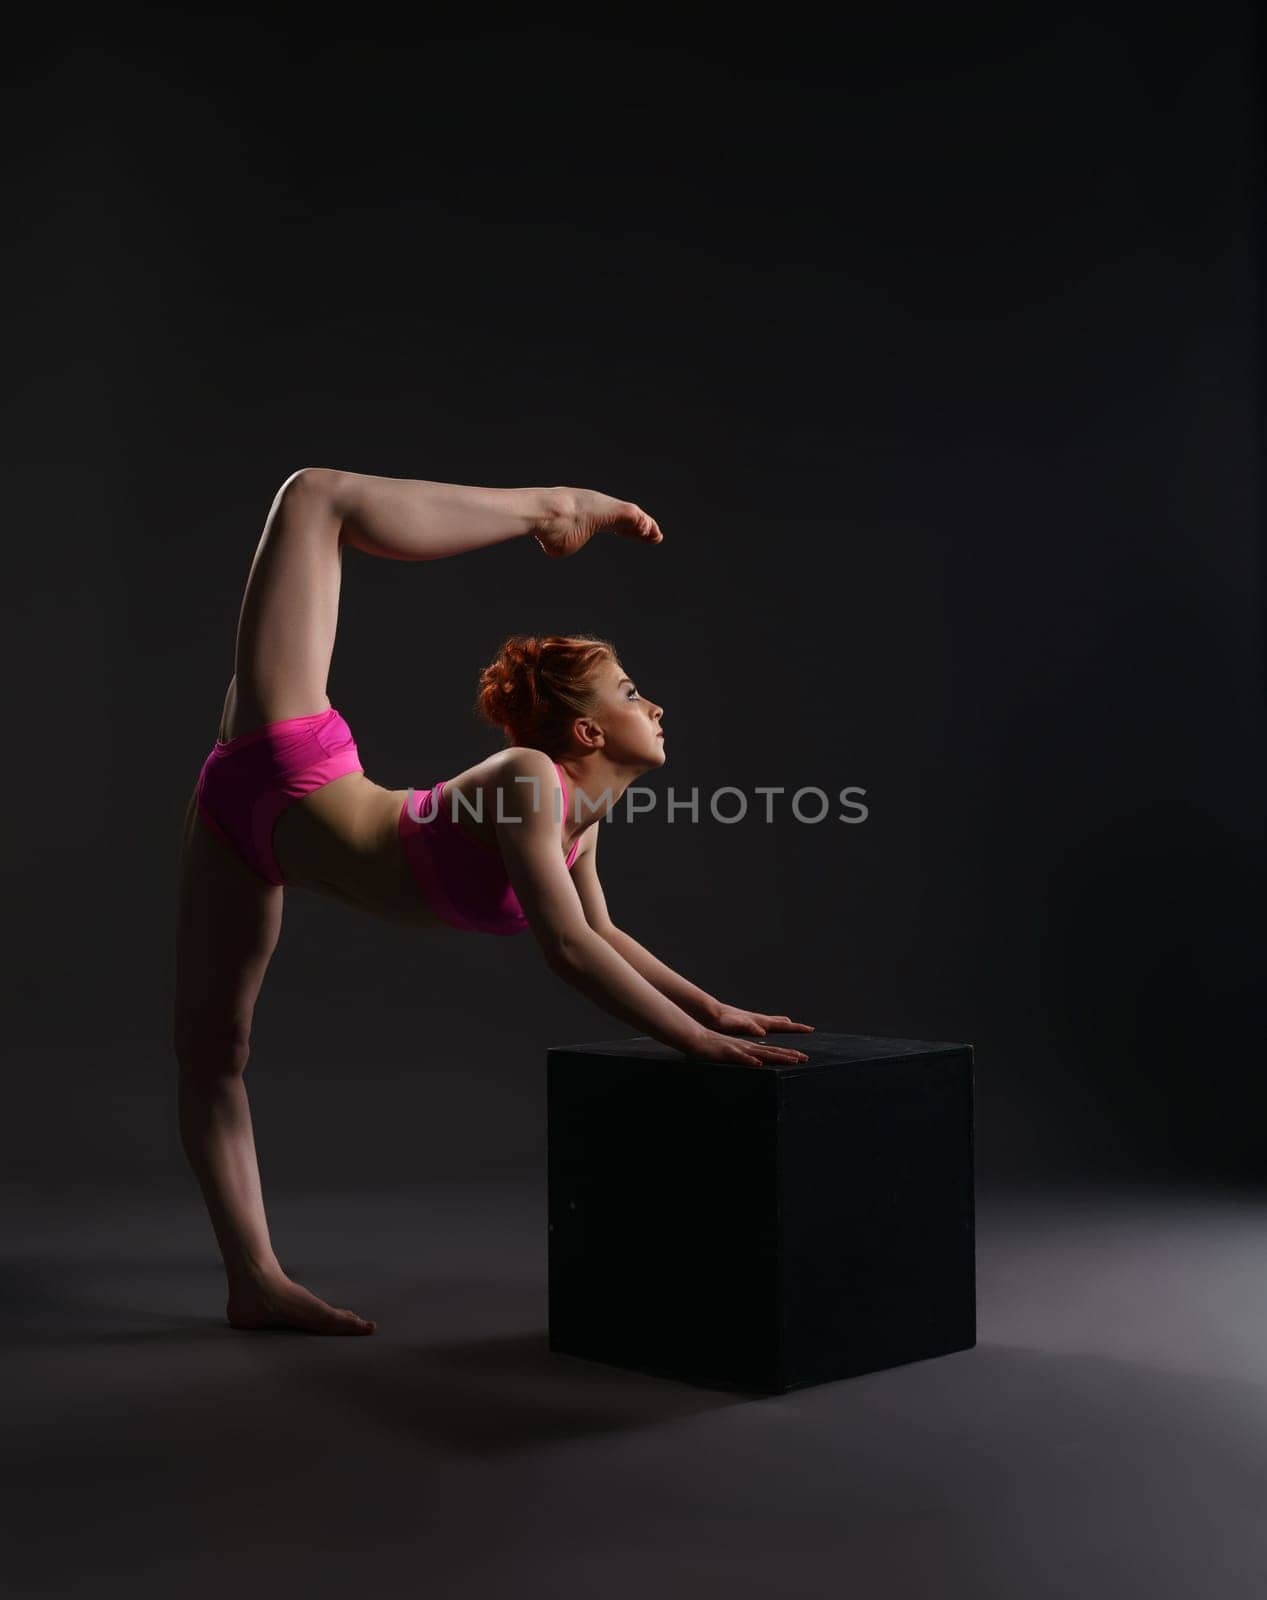 Flexible ballet dancer training on cube in studio